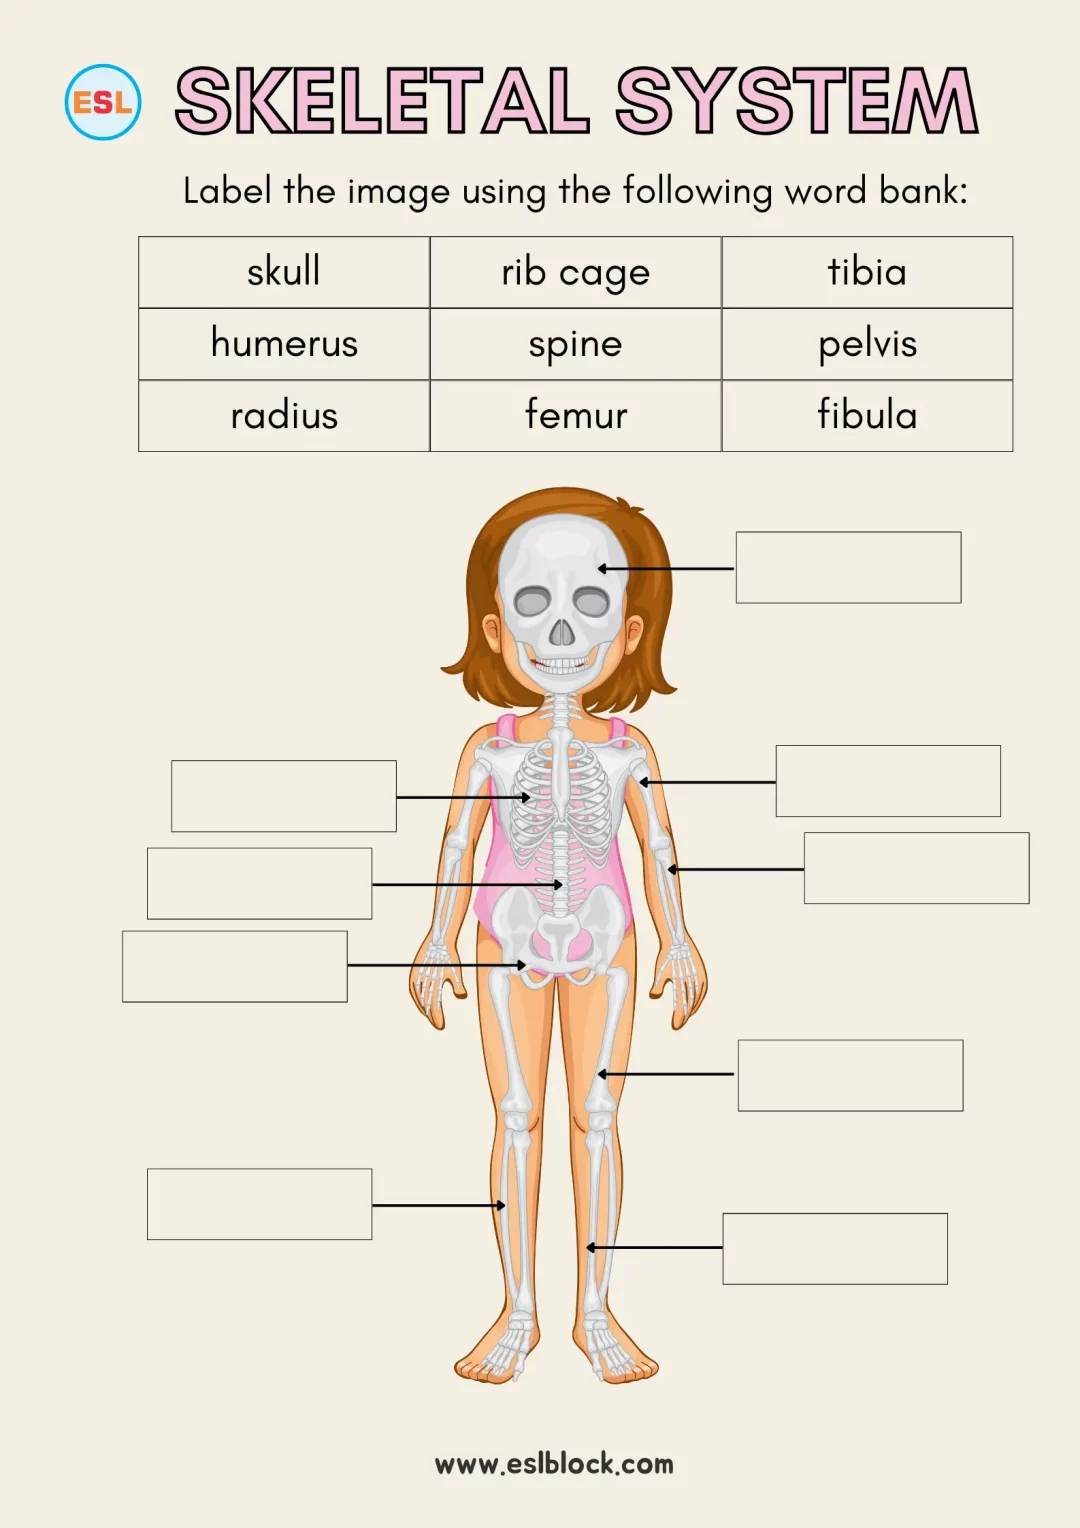 Bone Names of the Human Skeleton